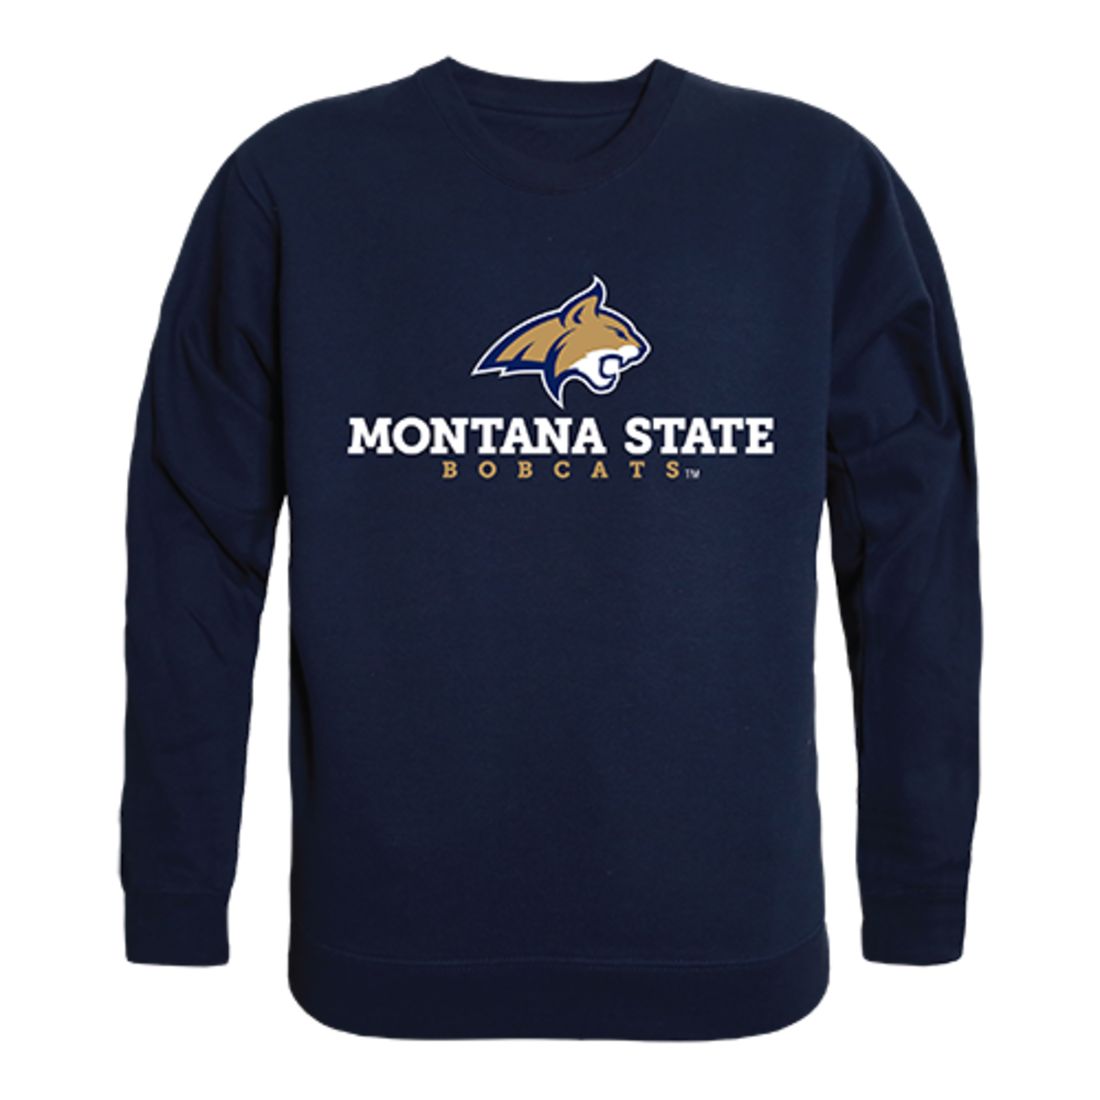 Montana State University Bobcats Crewneck Pullover Sweatshirt Sweater Navy-Campus-Wardrobe